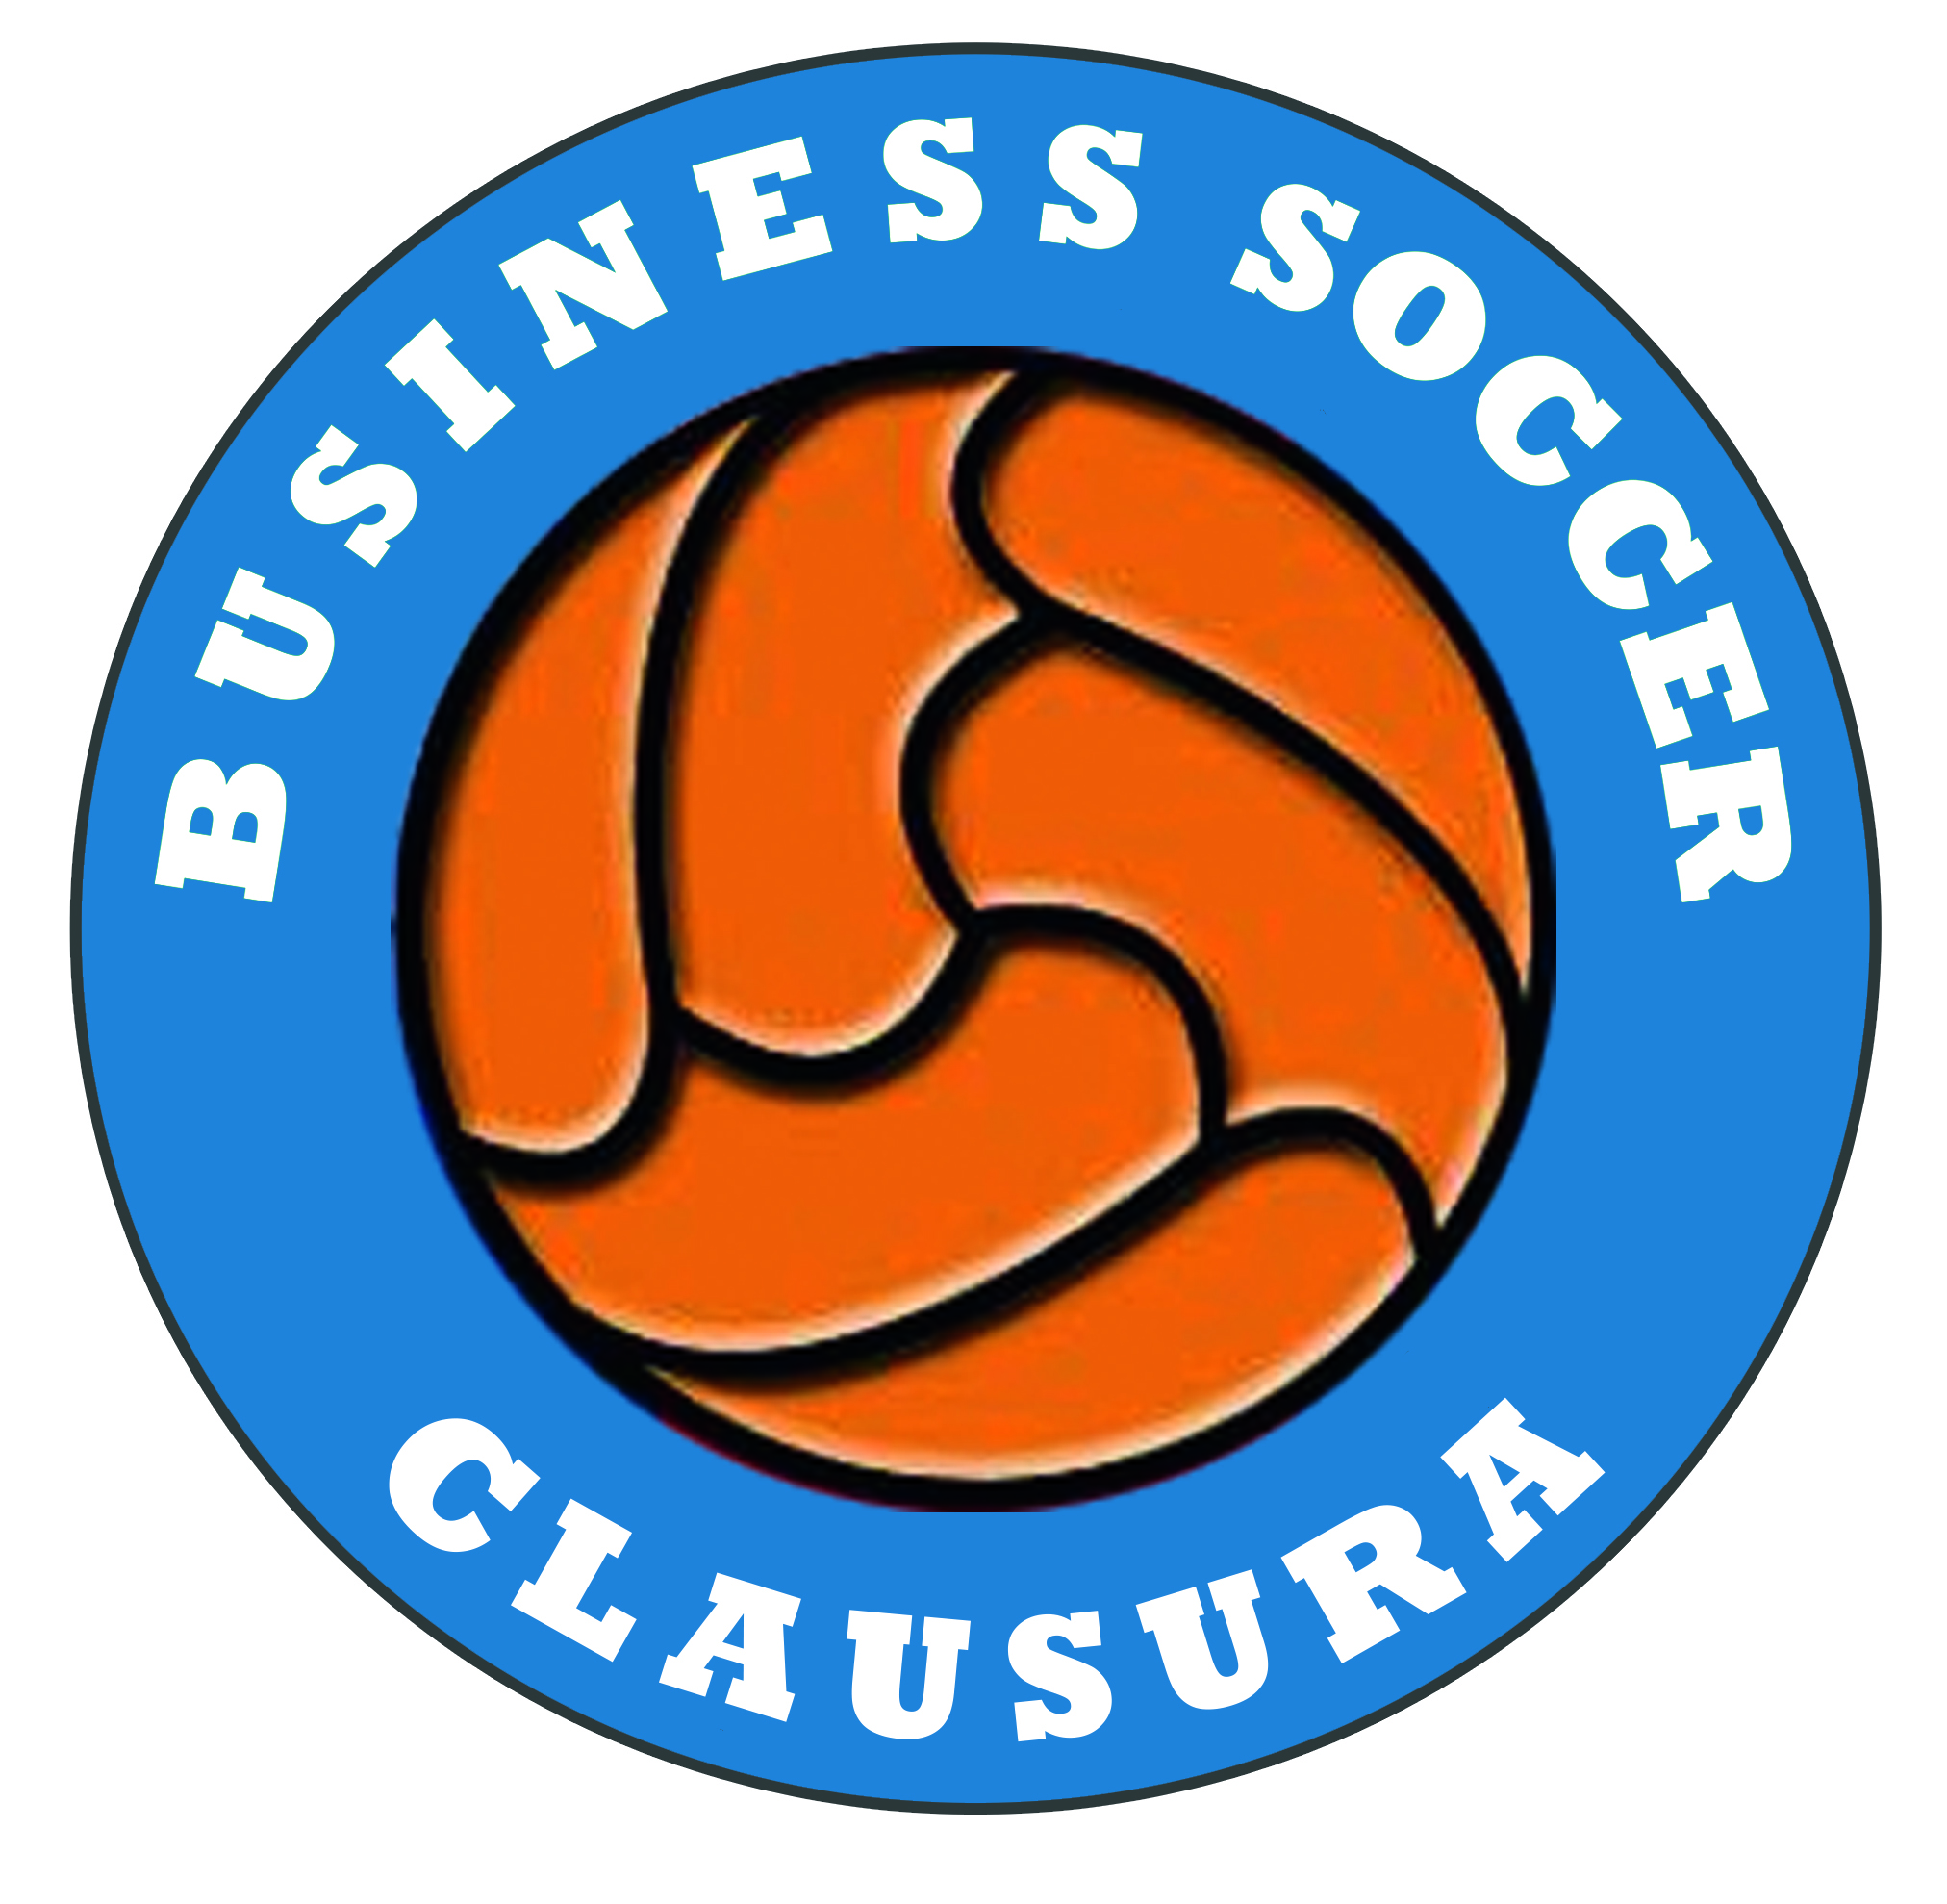 evento copa liga futbol madrid organizar empresas gestion club deportivo